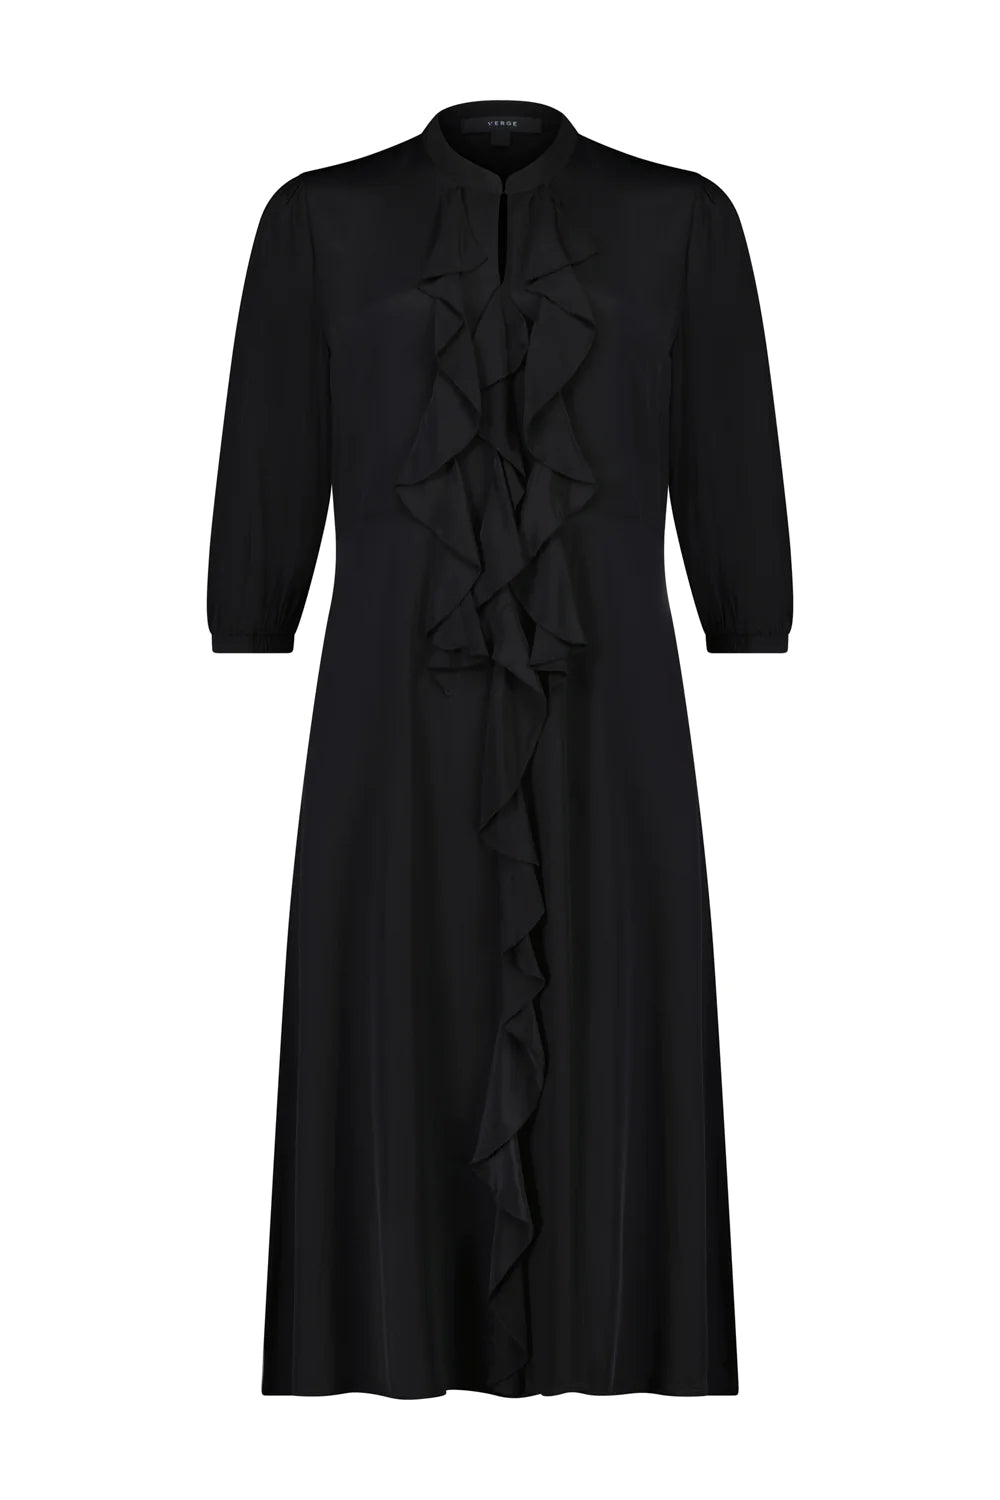 Verge Georgia Dress - Black